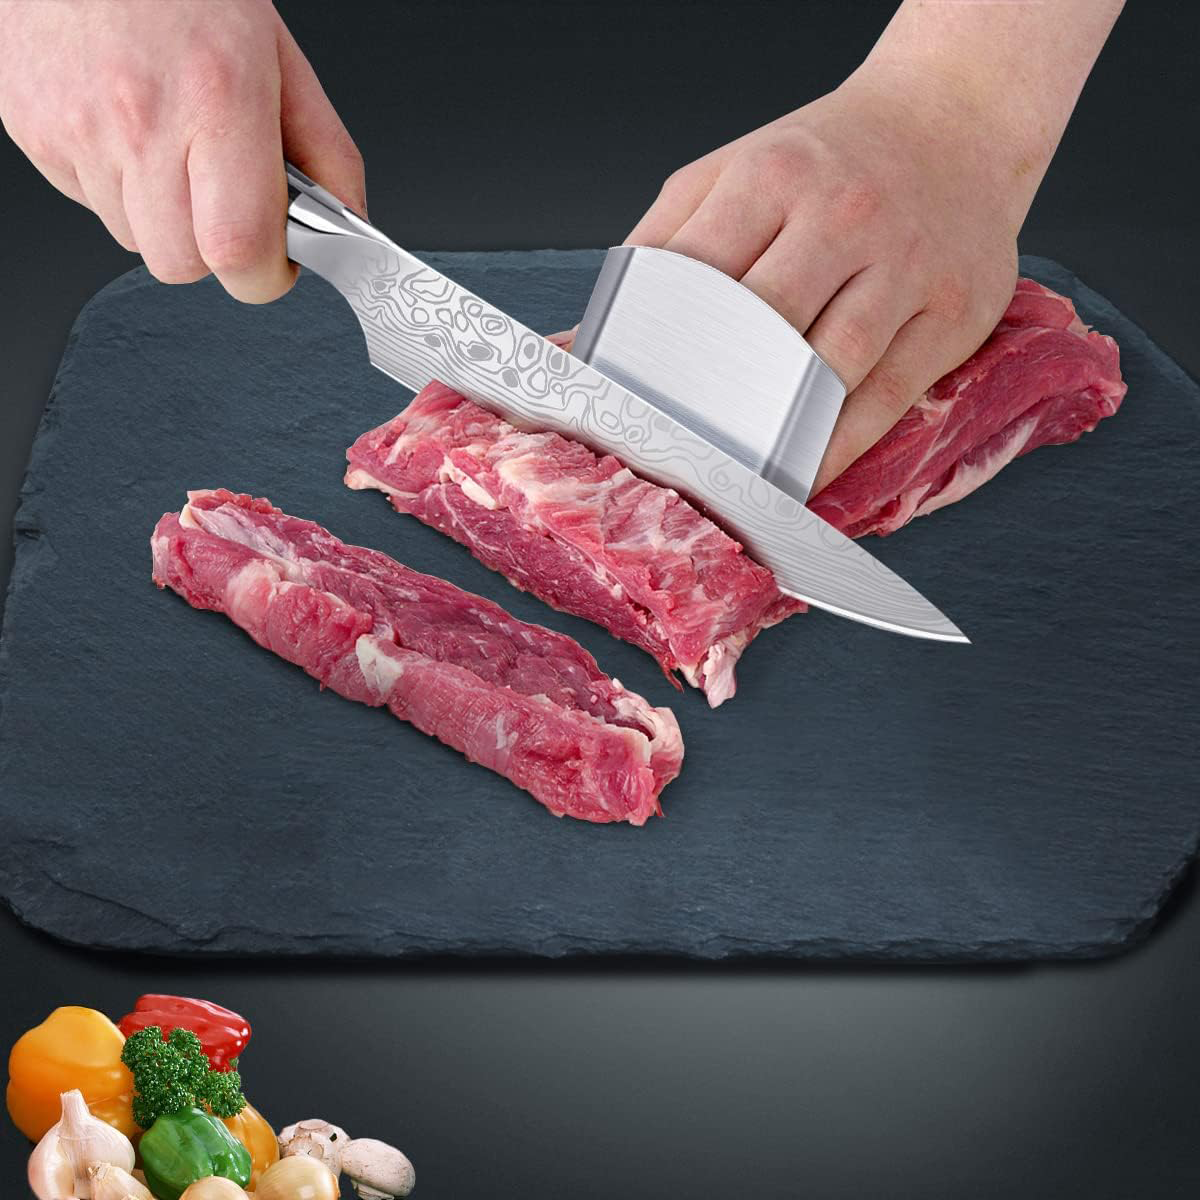 MOSFiATA 8 Super Sharp Professional Chef's Knife Review. 